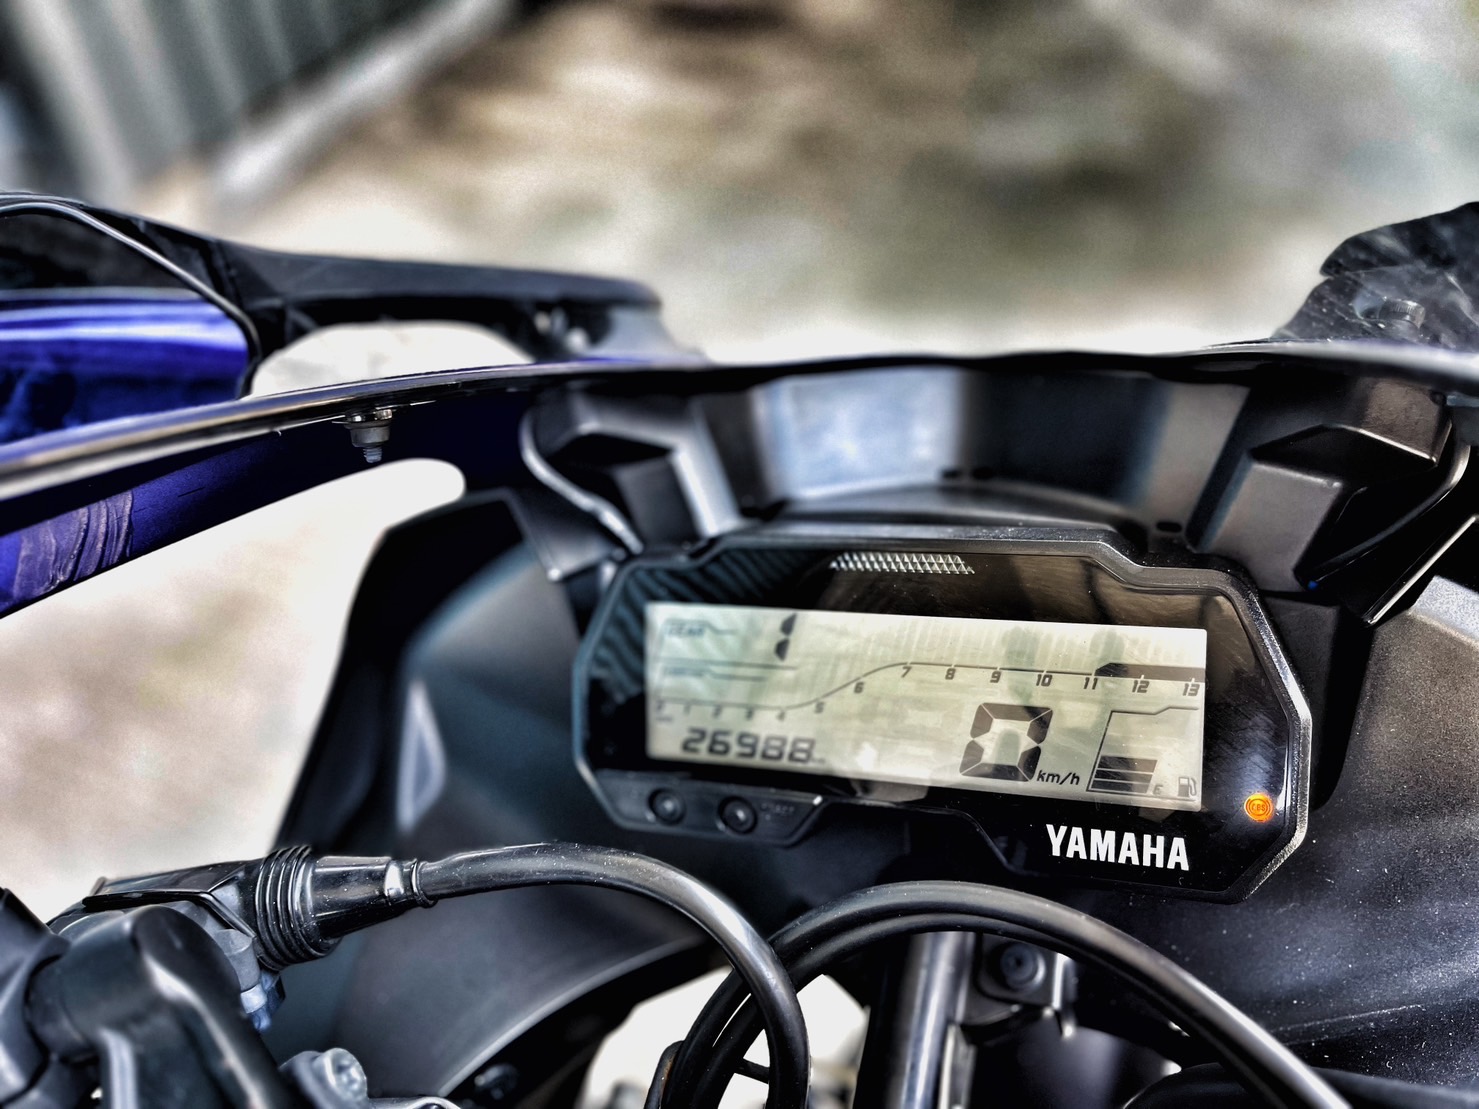 YAMAHA YZF-R15 - 中古/二手車出售中 ABS版 行車記錄器 基本改 小資族二手重機買賣 | 小資族二手重機買賣